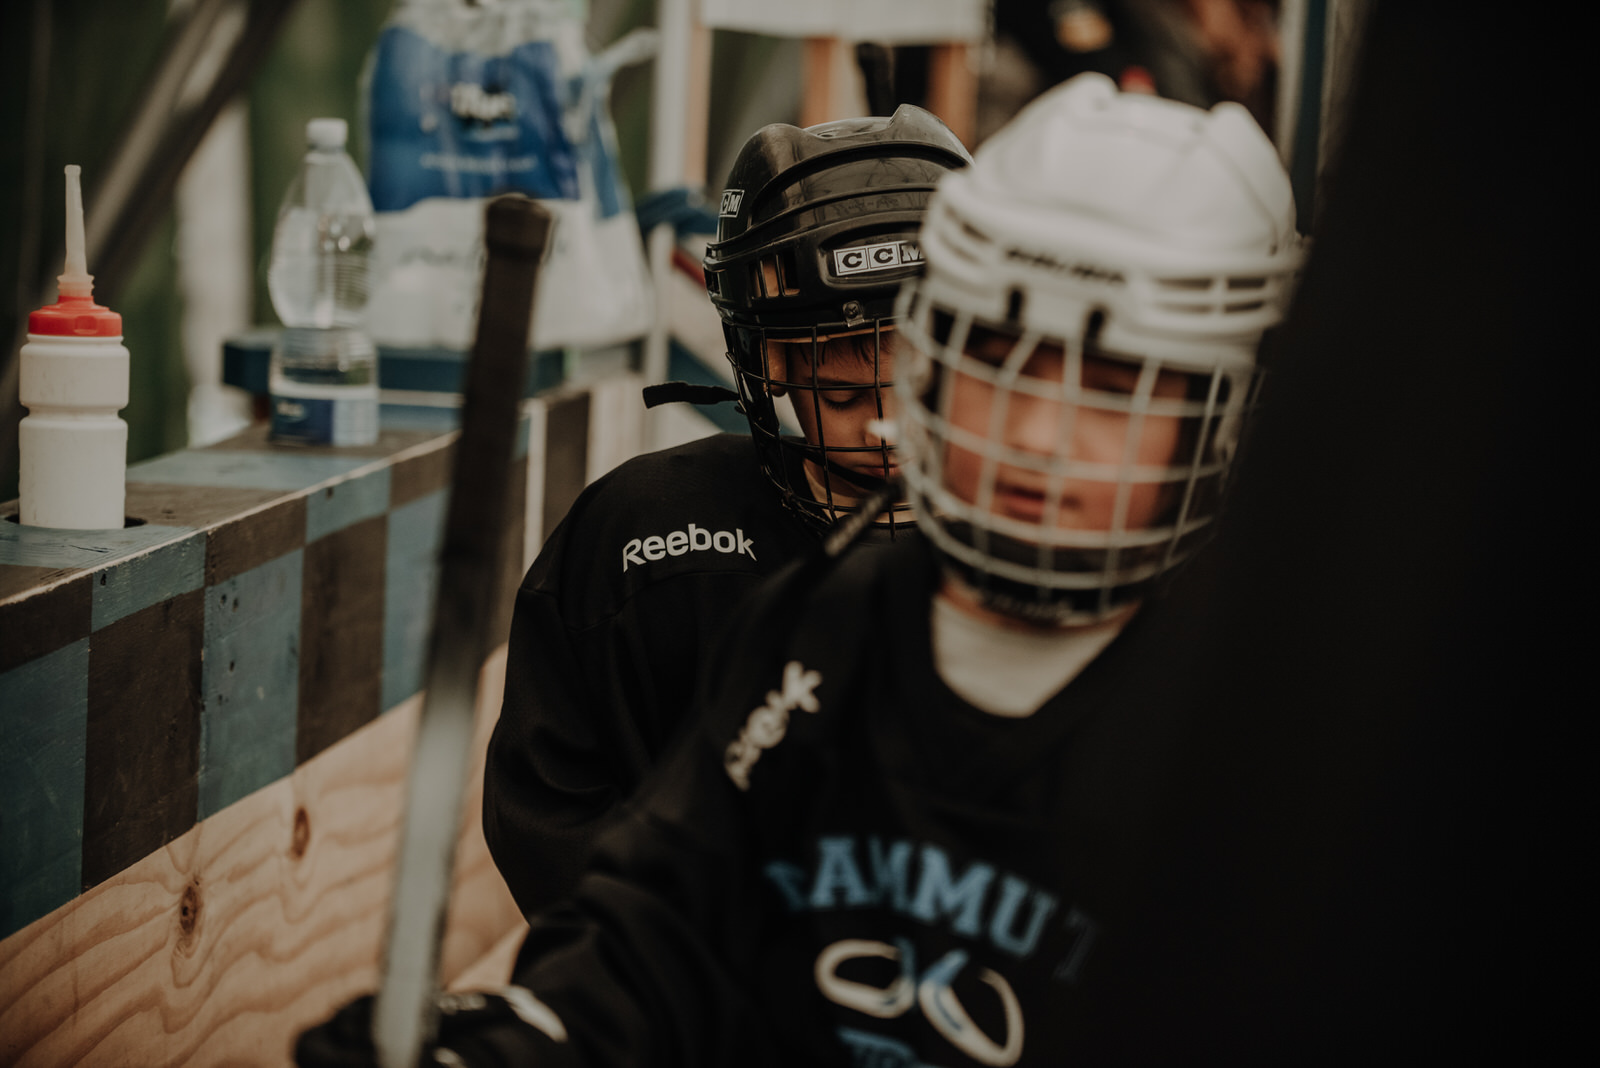 mammuth hockey, hockey inline, inline hockey, roma hockey, hockey roma, giovanili hockey, giovanili roma, sport giovanili roma, hockey giovanile roma